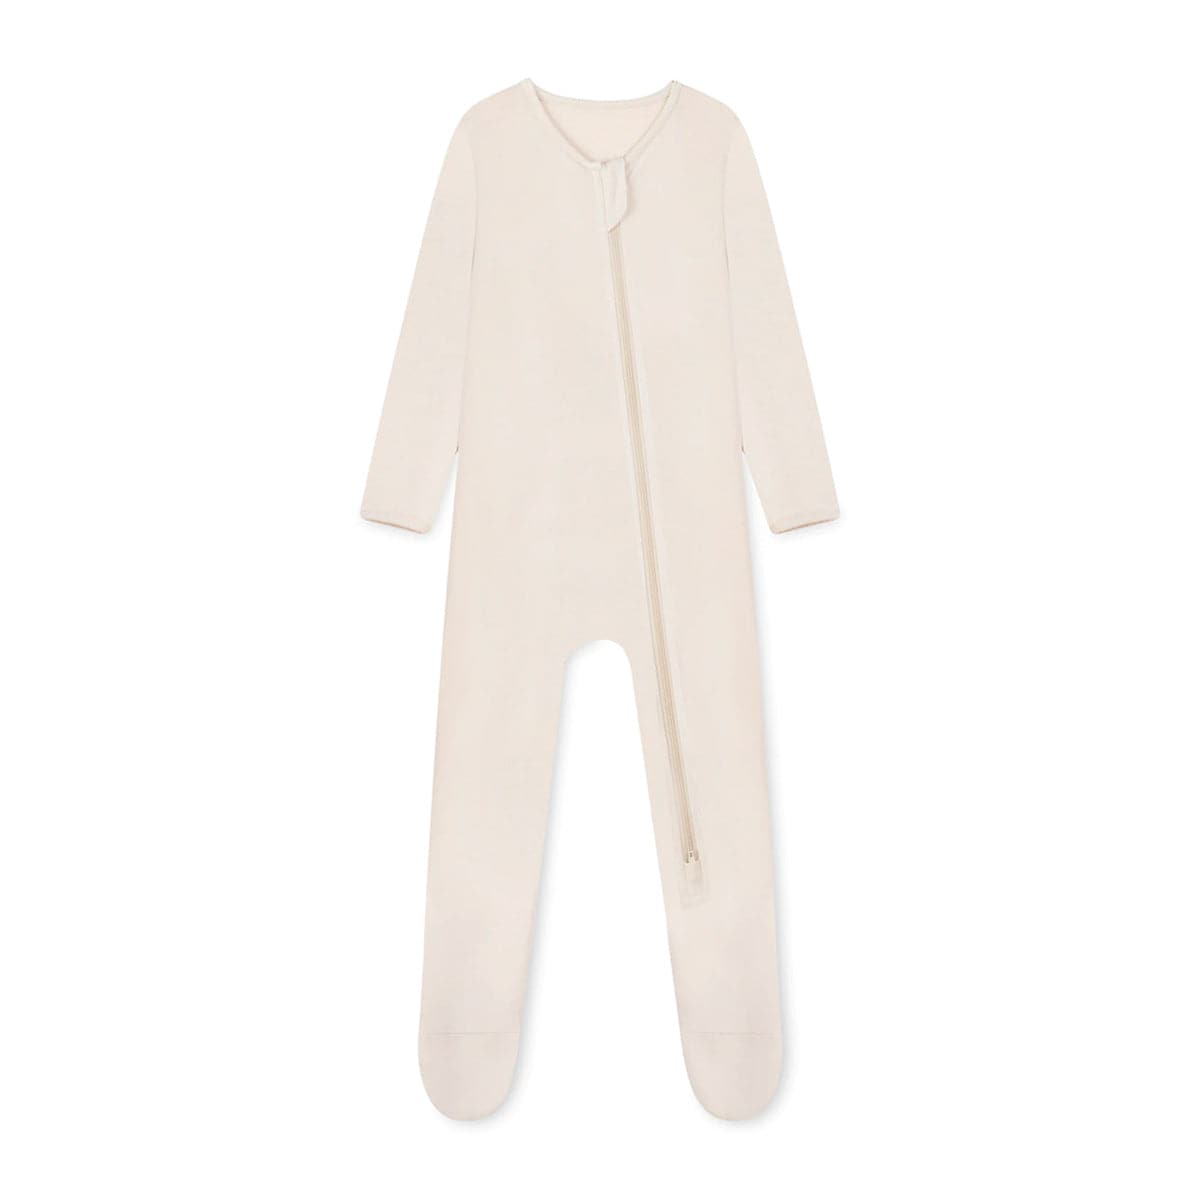 Zipper Romper Baby Footie Pajamas - Creamy White